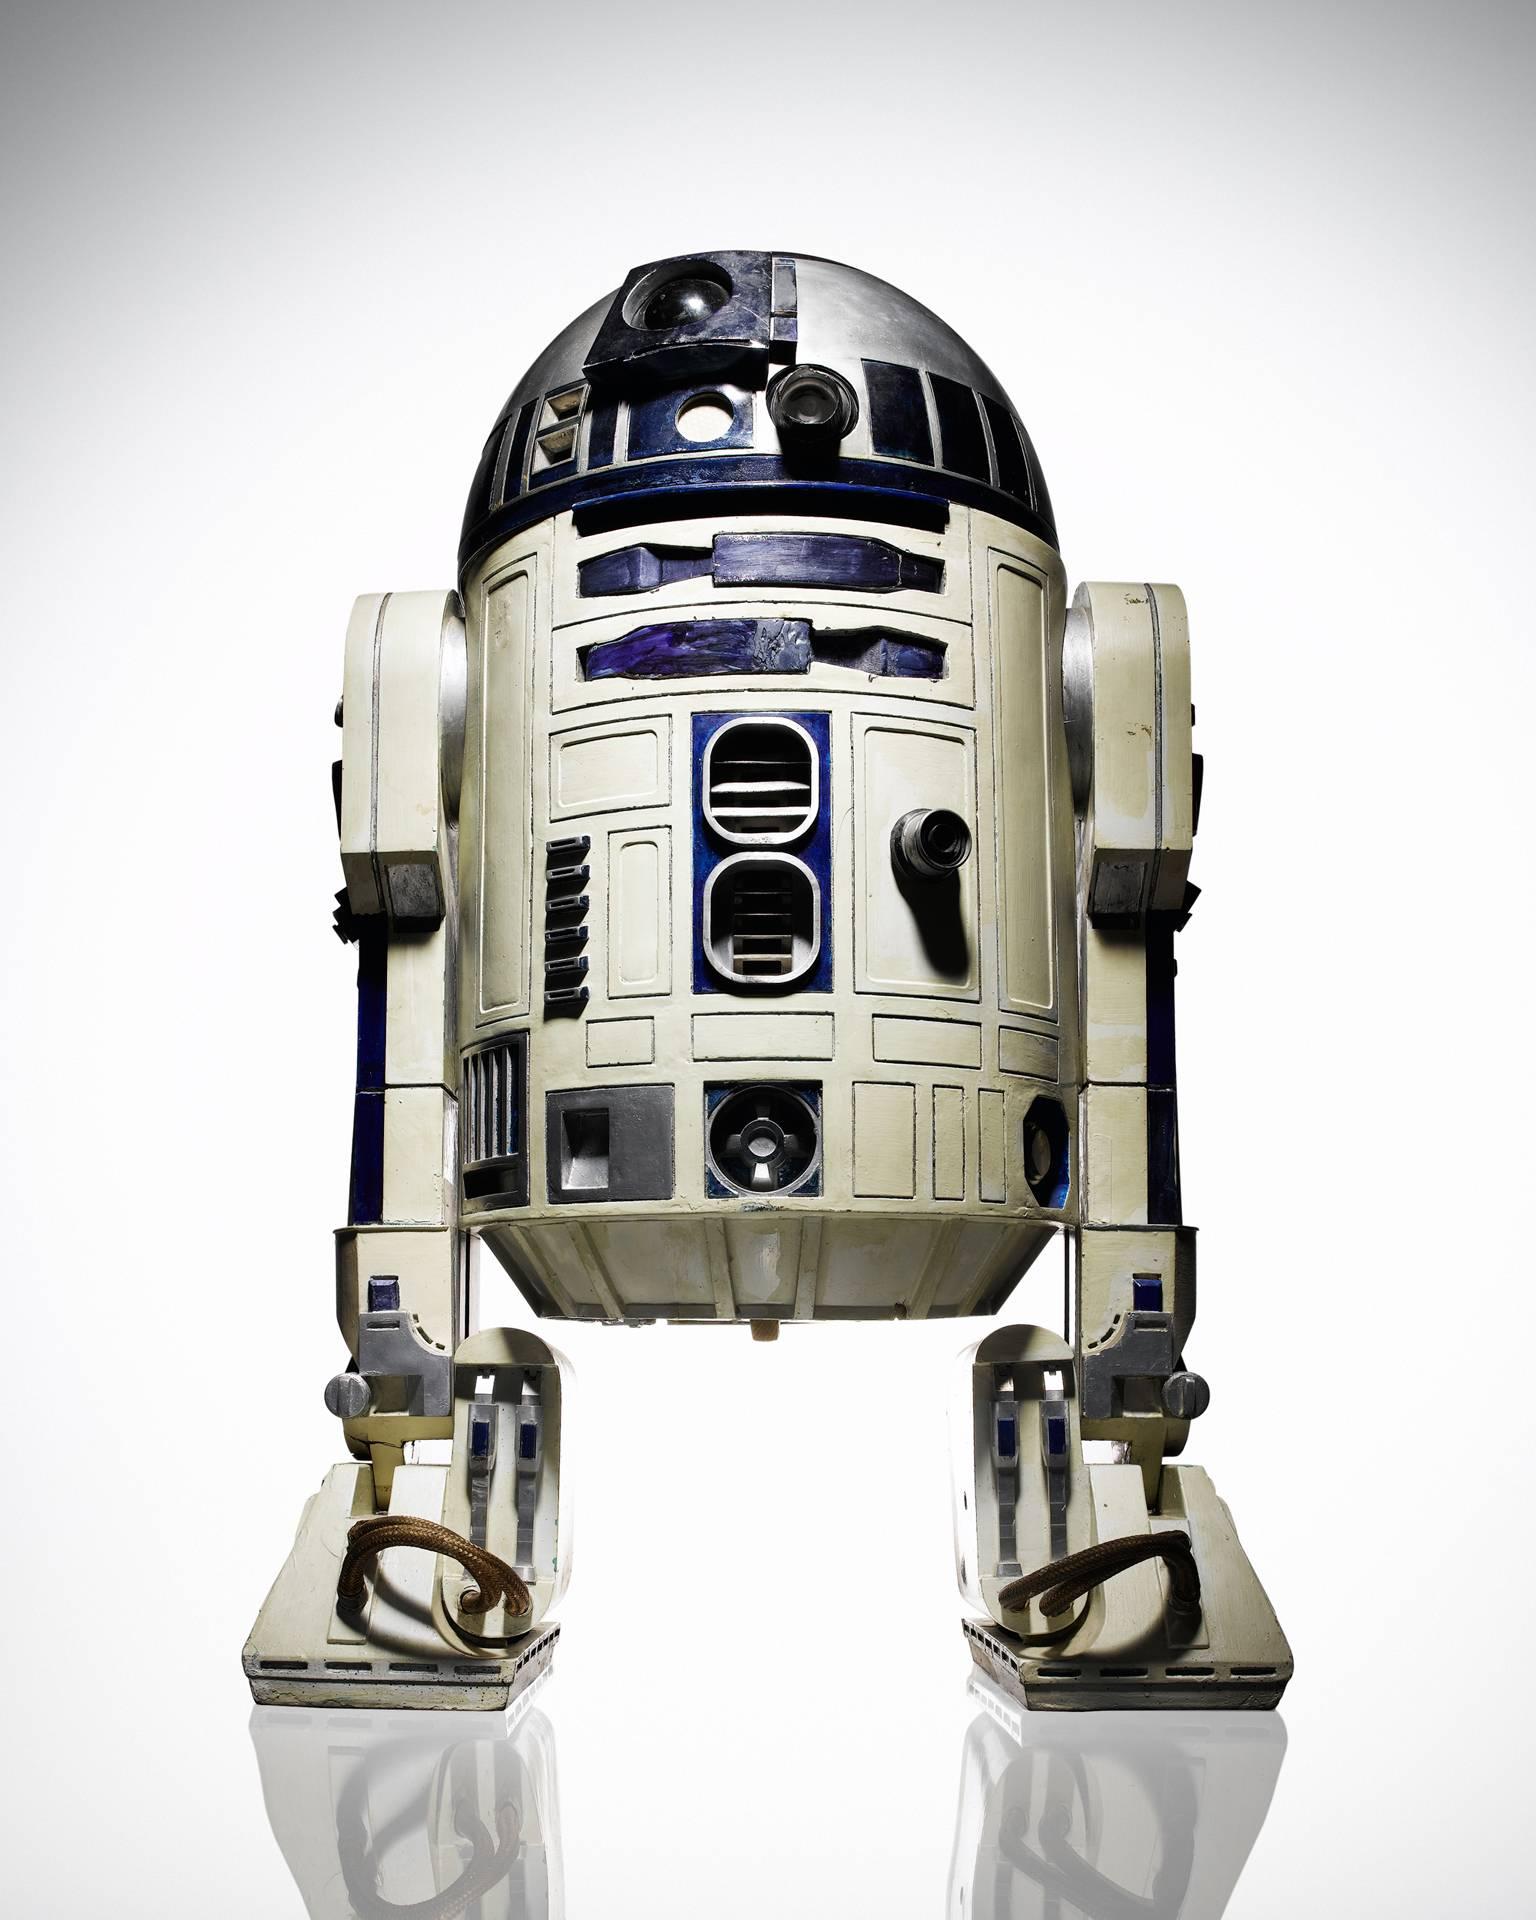 Tom Schierlitz Color Photograph – Star Wars ( R2-D2 ) – großformatige Fotografie des ikonischenroid-Roboters im Originalformat